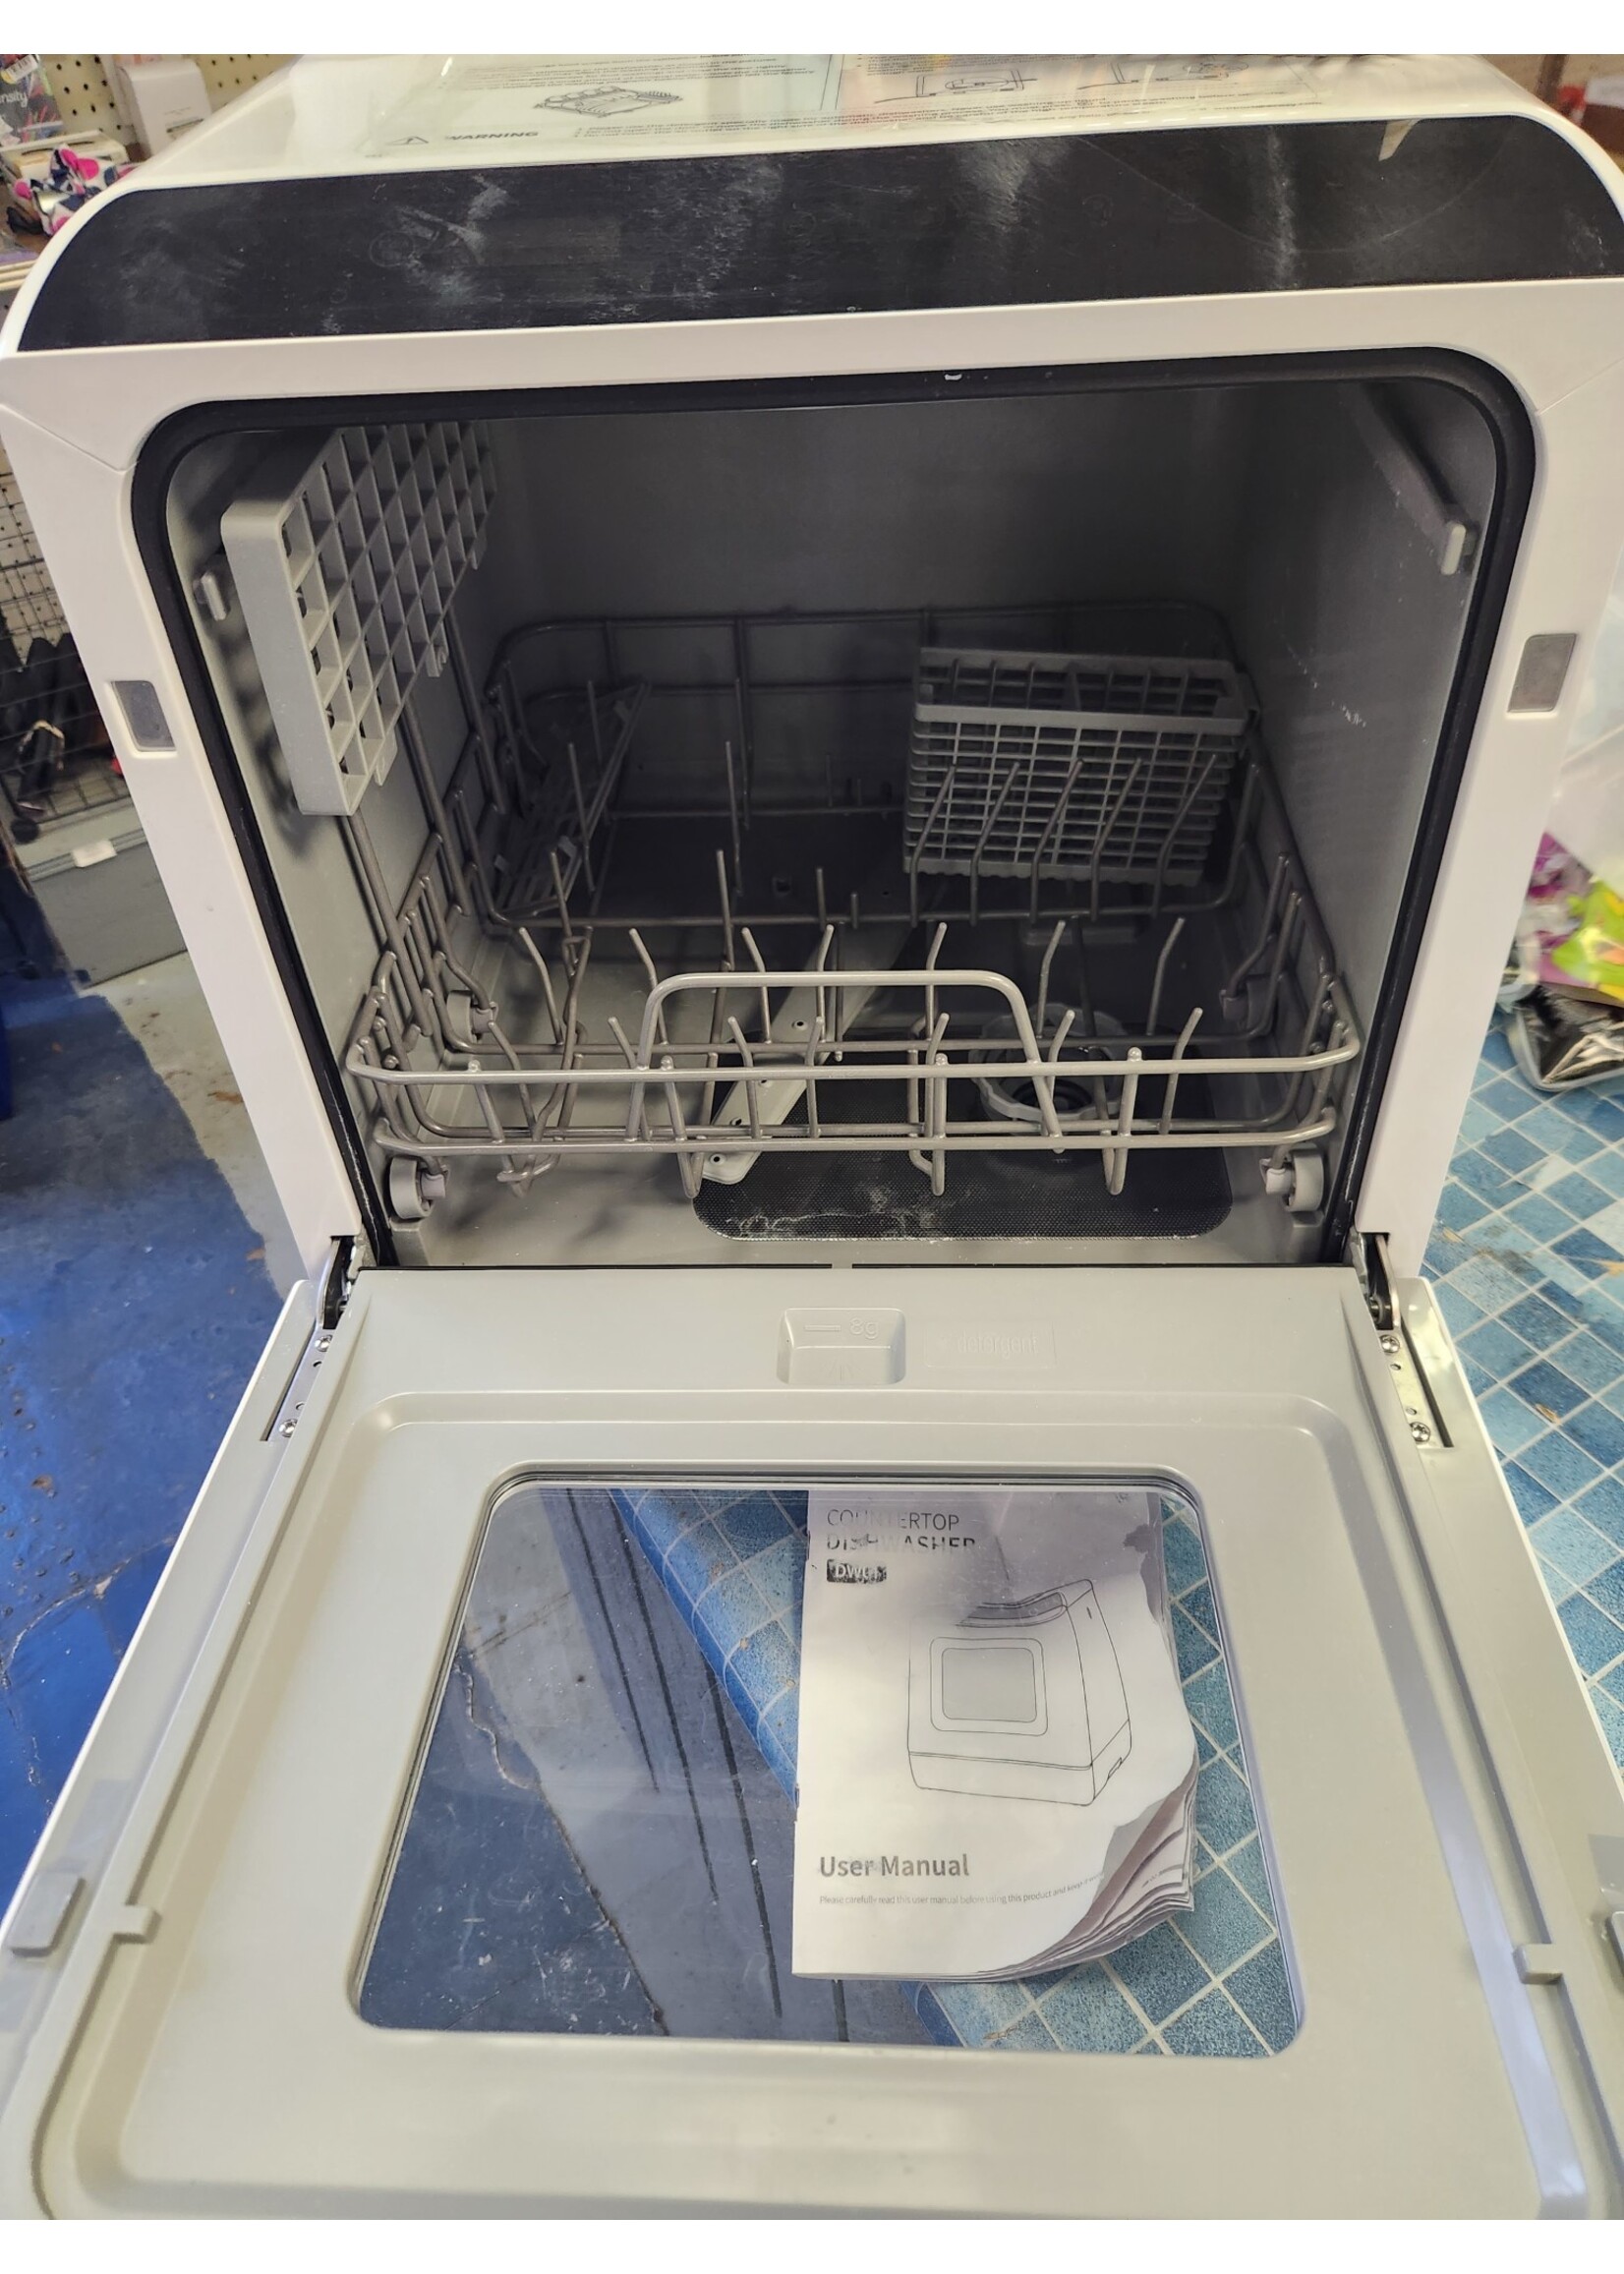 Mini Dishwasher Portable Dishwasher